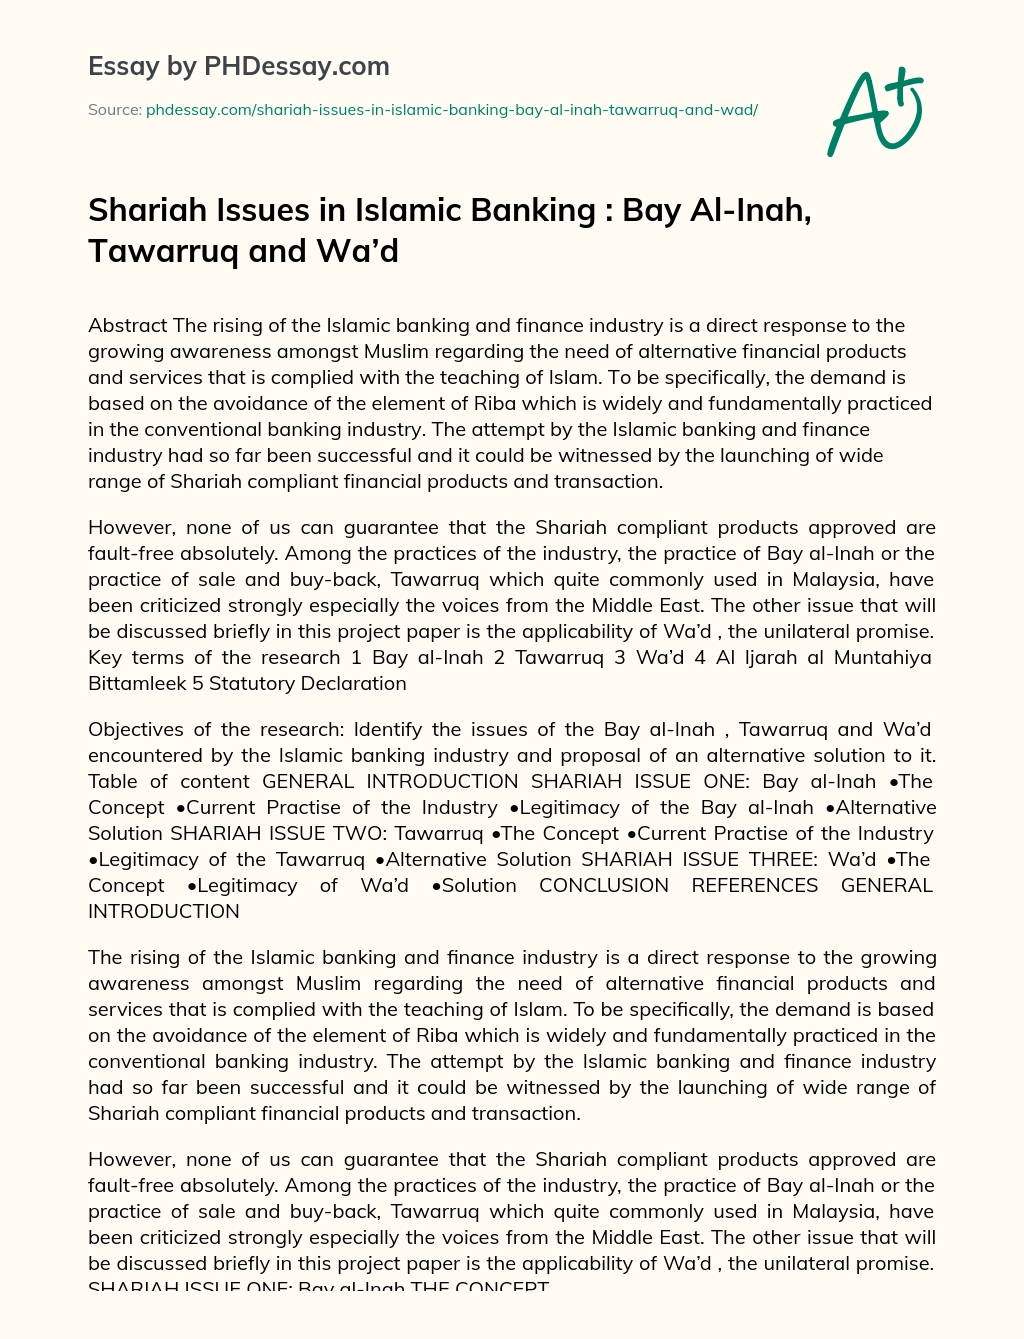 Shariah Issues in Islamic Banking : Bay Al-Inah, Tawarruq and Wa’d essay